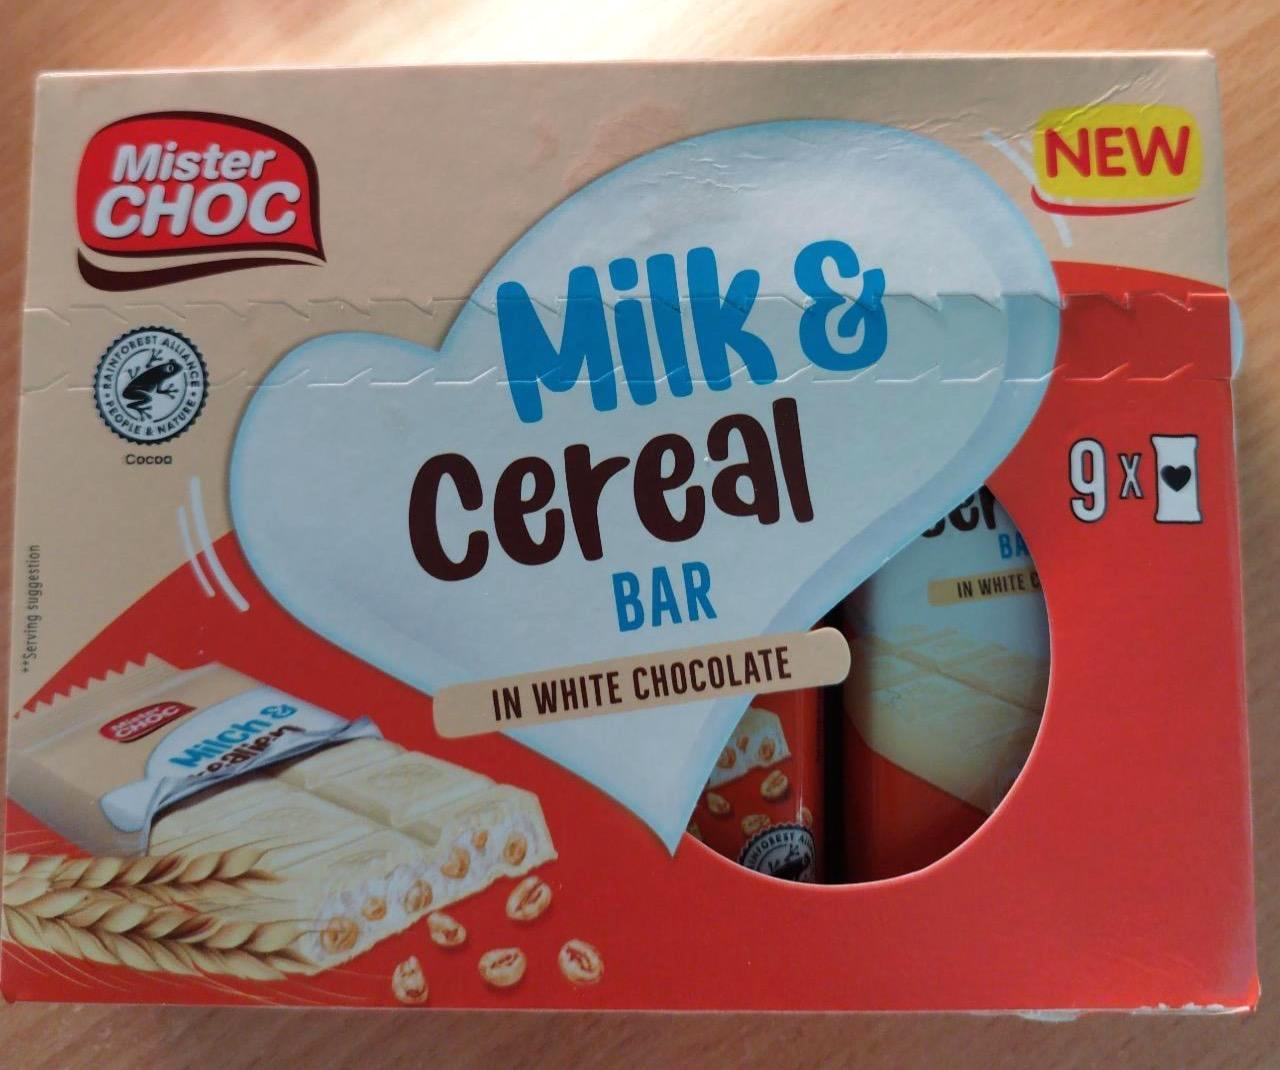 Képek - Milk & Cereal bar in white chocolate Mister Choc